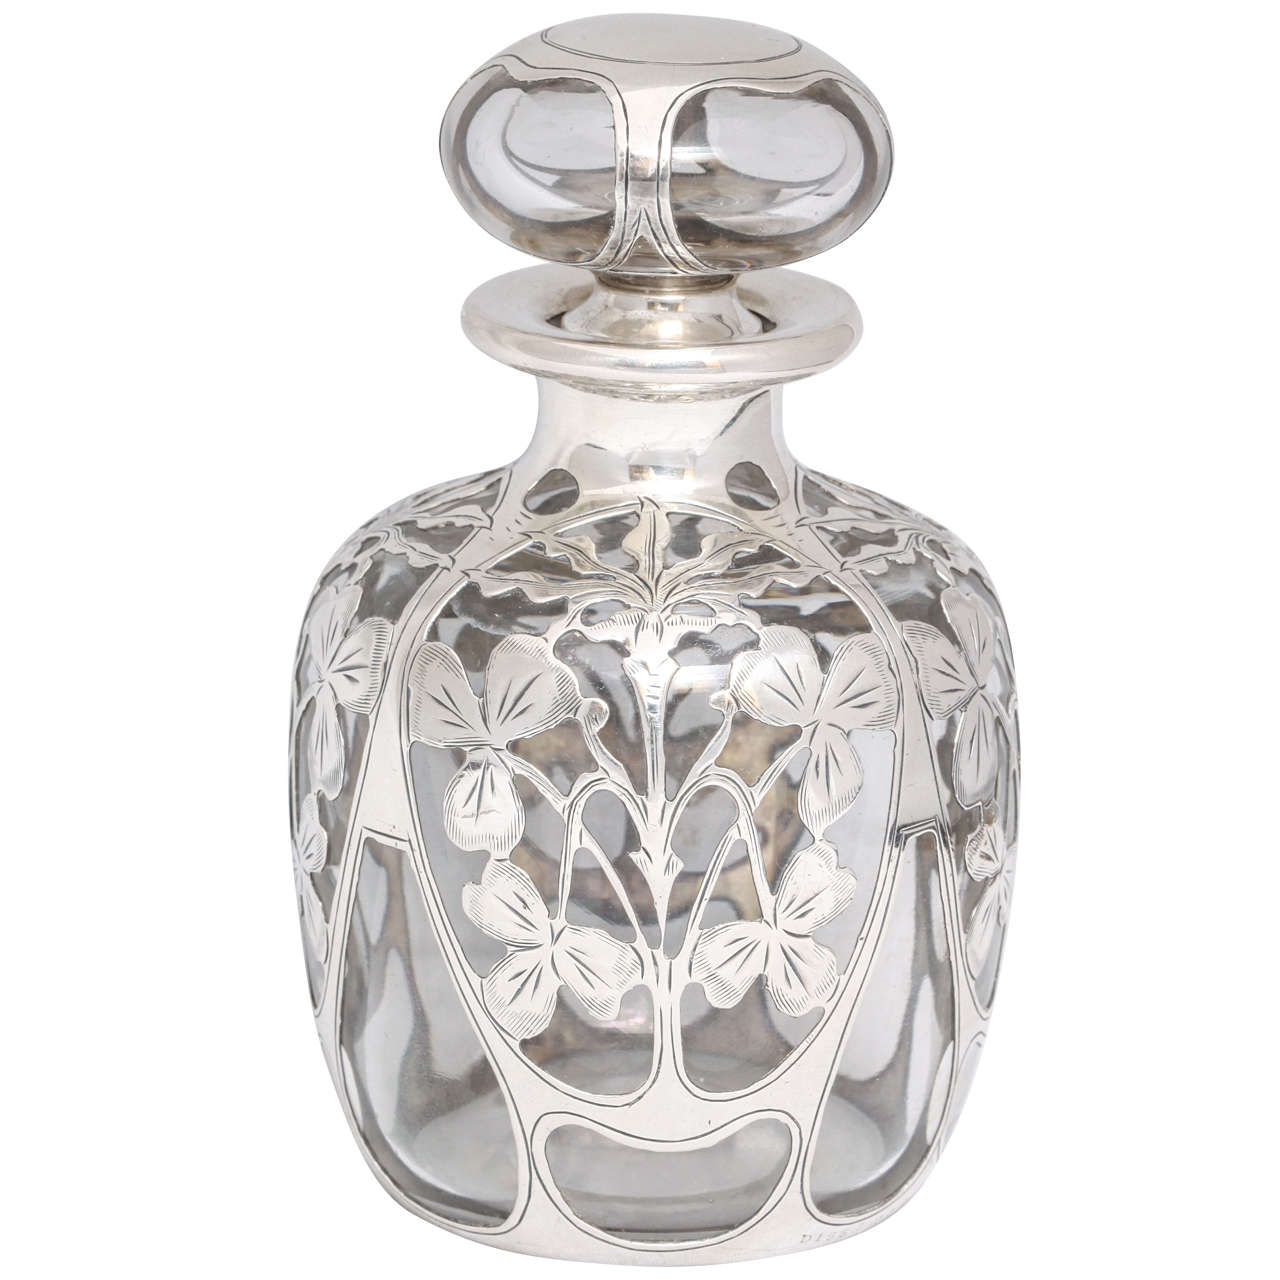 Art Nouveau Sterling Silver Overlay Perfume Bottle